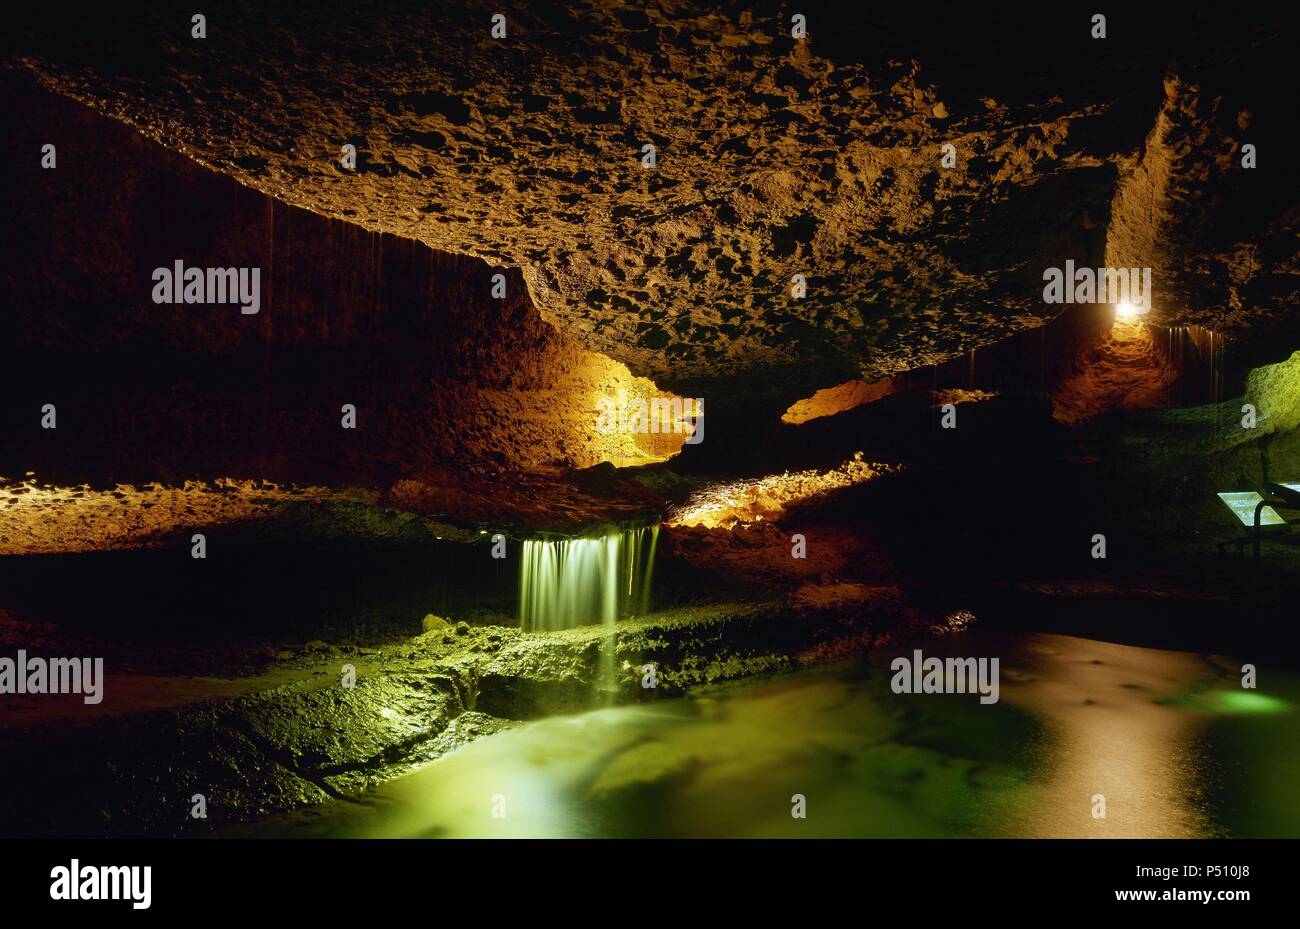 Font Major Cave Museum. Interior. L'Espluga de Francoli, Province of Tarragona, Catalonia, Spain. Stock Photo